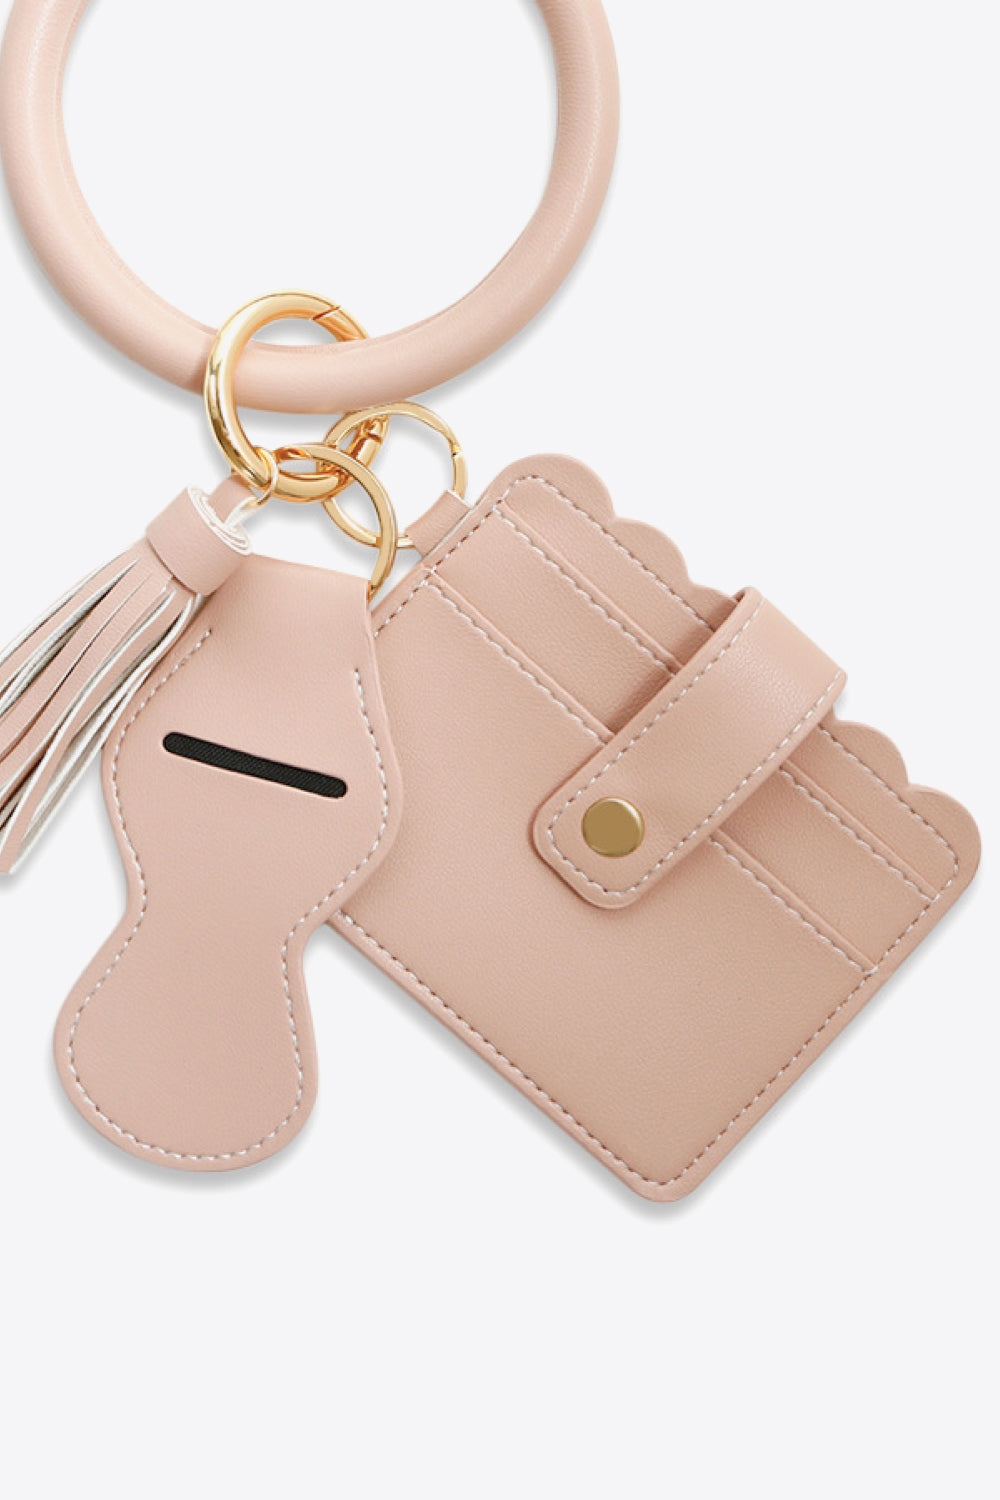 PU Wristlet Keychain with Card Holder - Premium  - Just $15! Shop now at Nine Thirty Nine Design